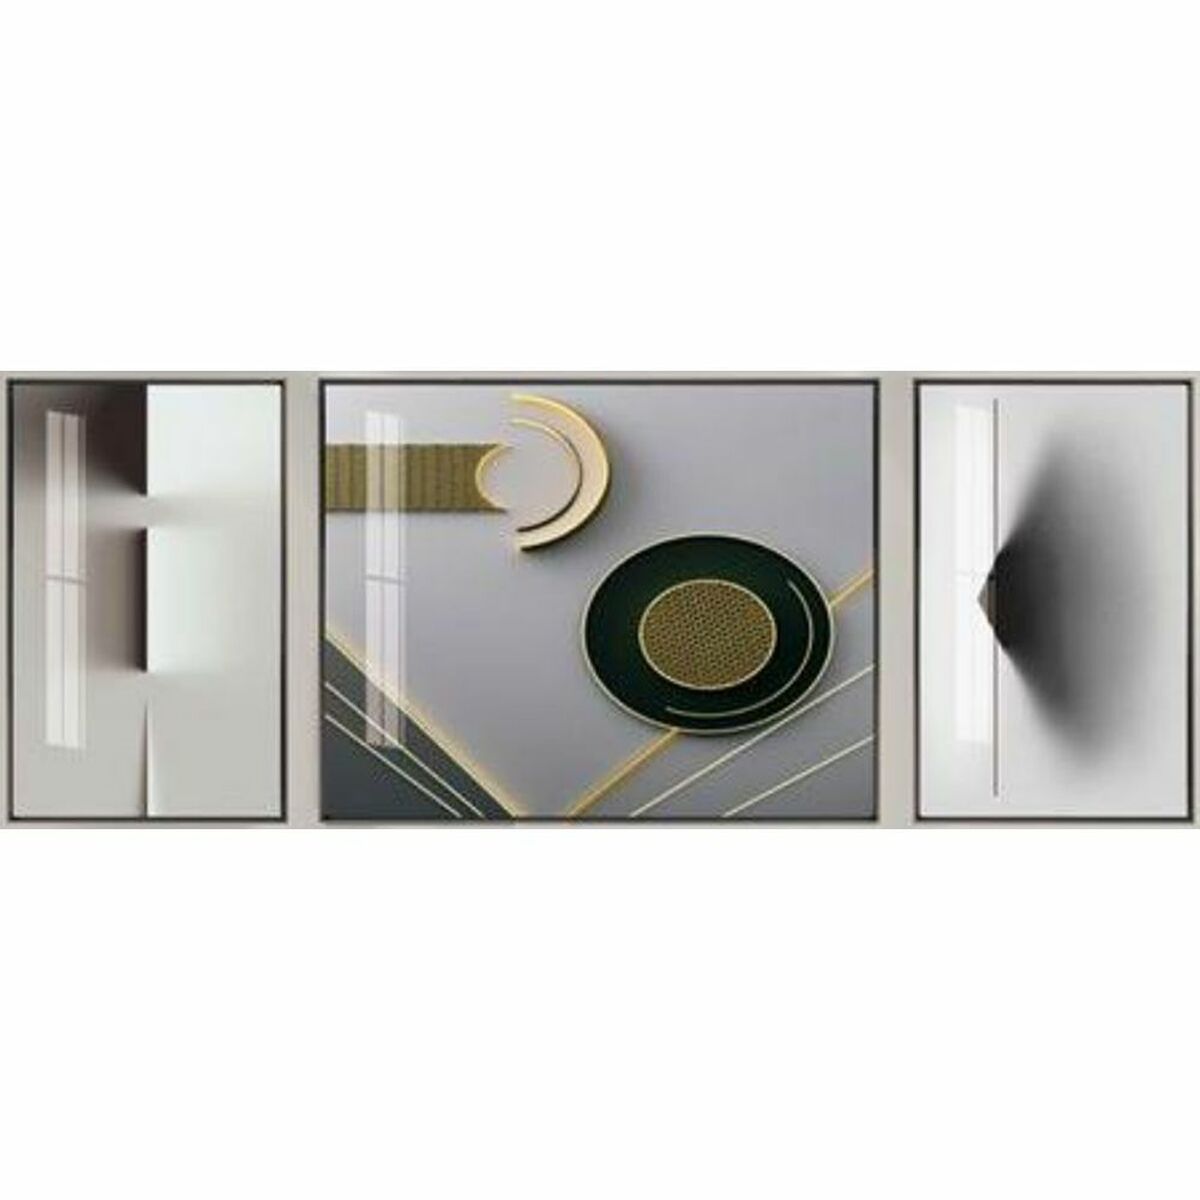 Marco de diseño abstracto para decoración del hogar moderno (240 x 3 x 80 cm)